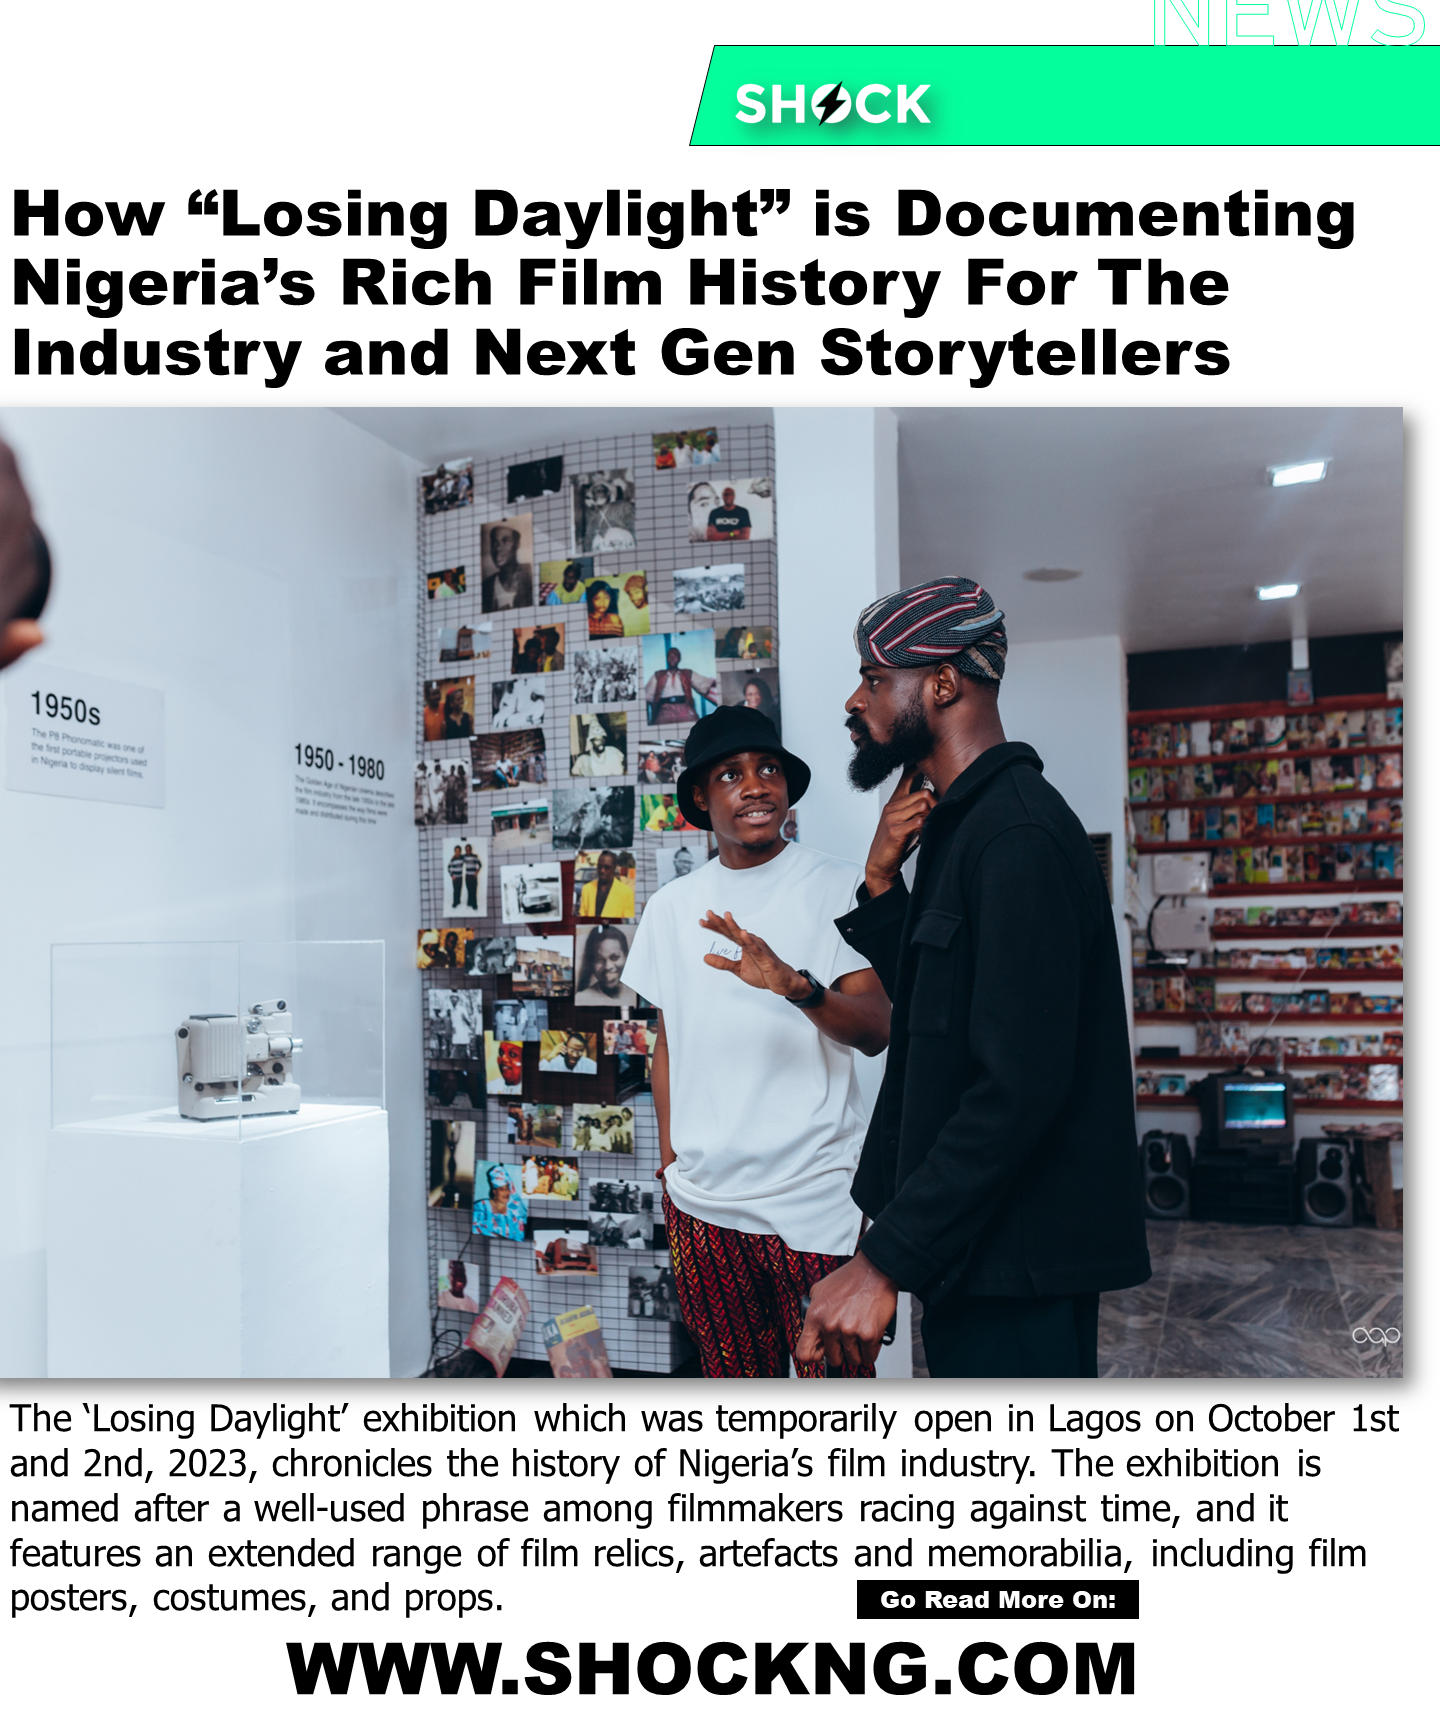 Loosing daylight - How "Losing Daylight" is Documenting Nigeria's Film History